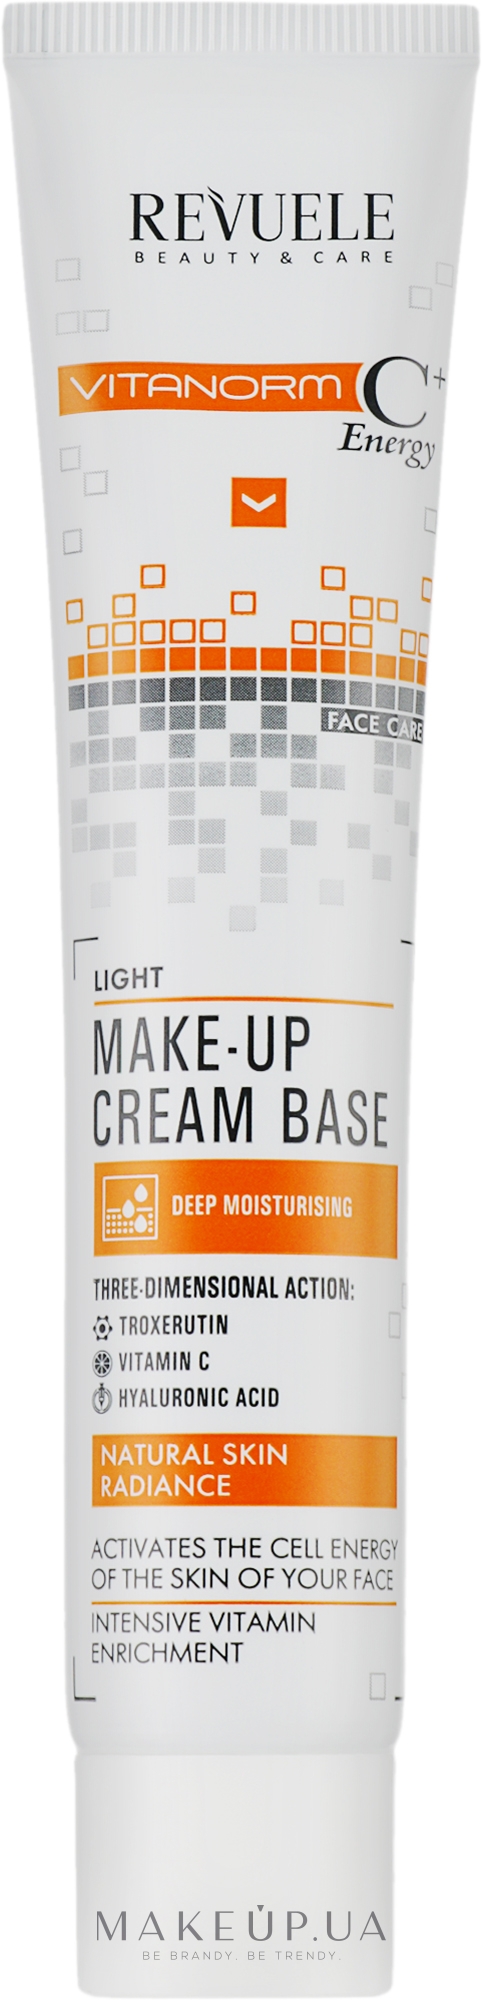 Крем-база под макияж - Revuele Vitanorm C+ Make-up Cream Base-Light  — фото 50ml